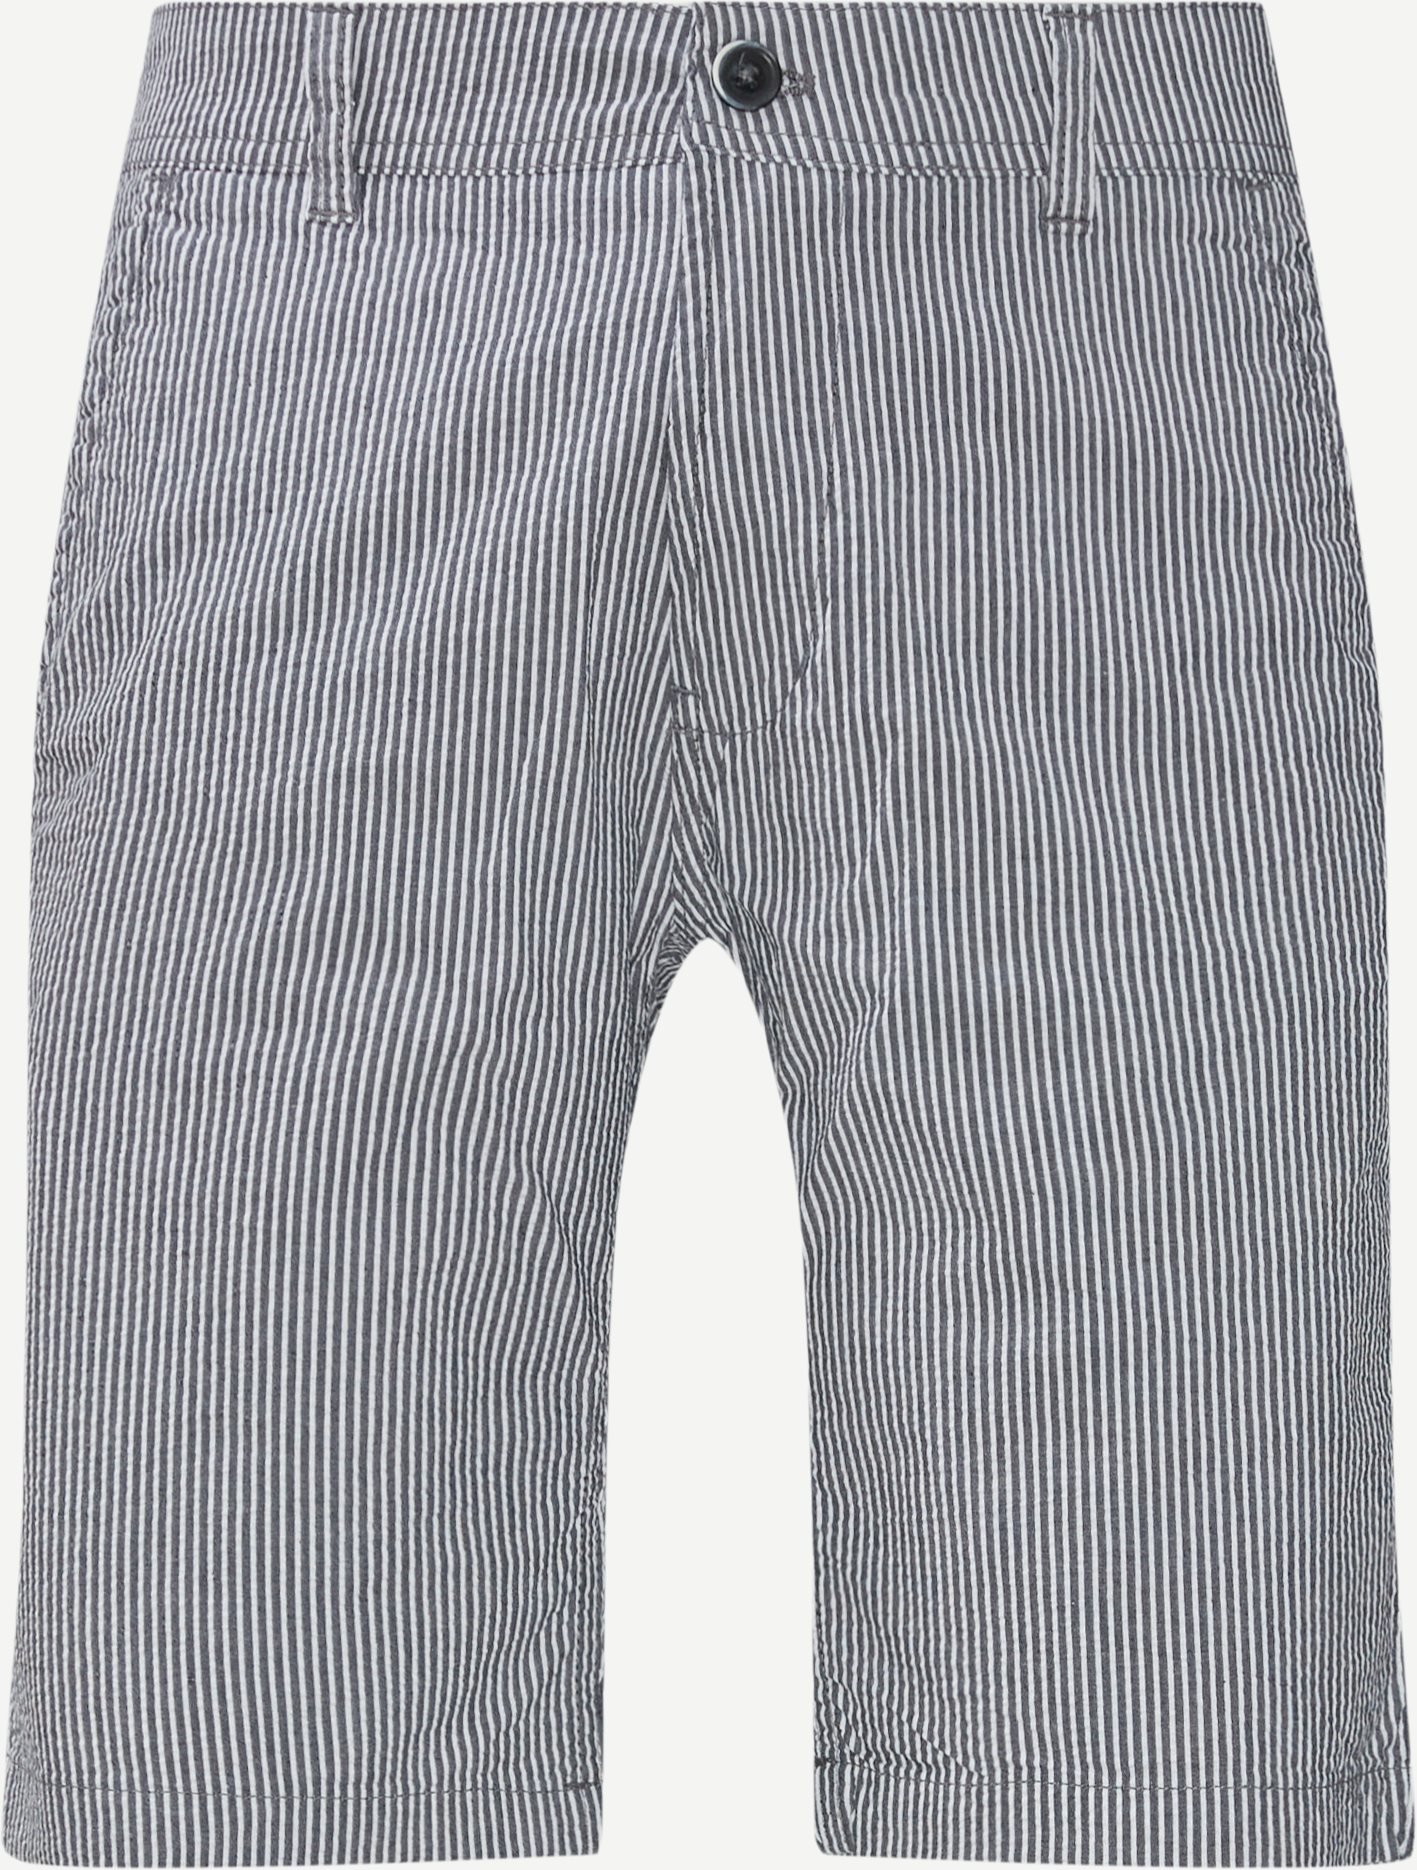 Cusco Seersucker Shorts - Shorts - Slim fit - Blå